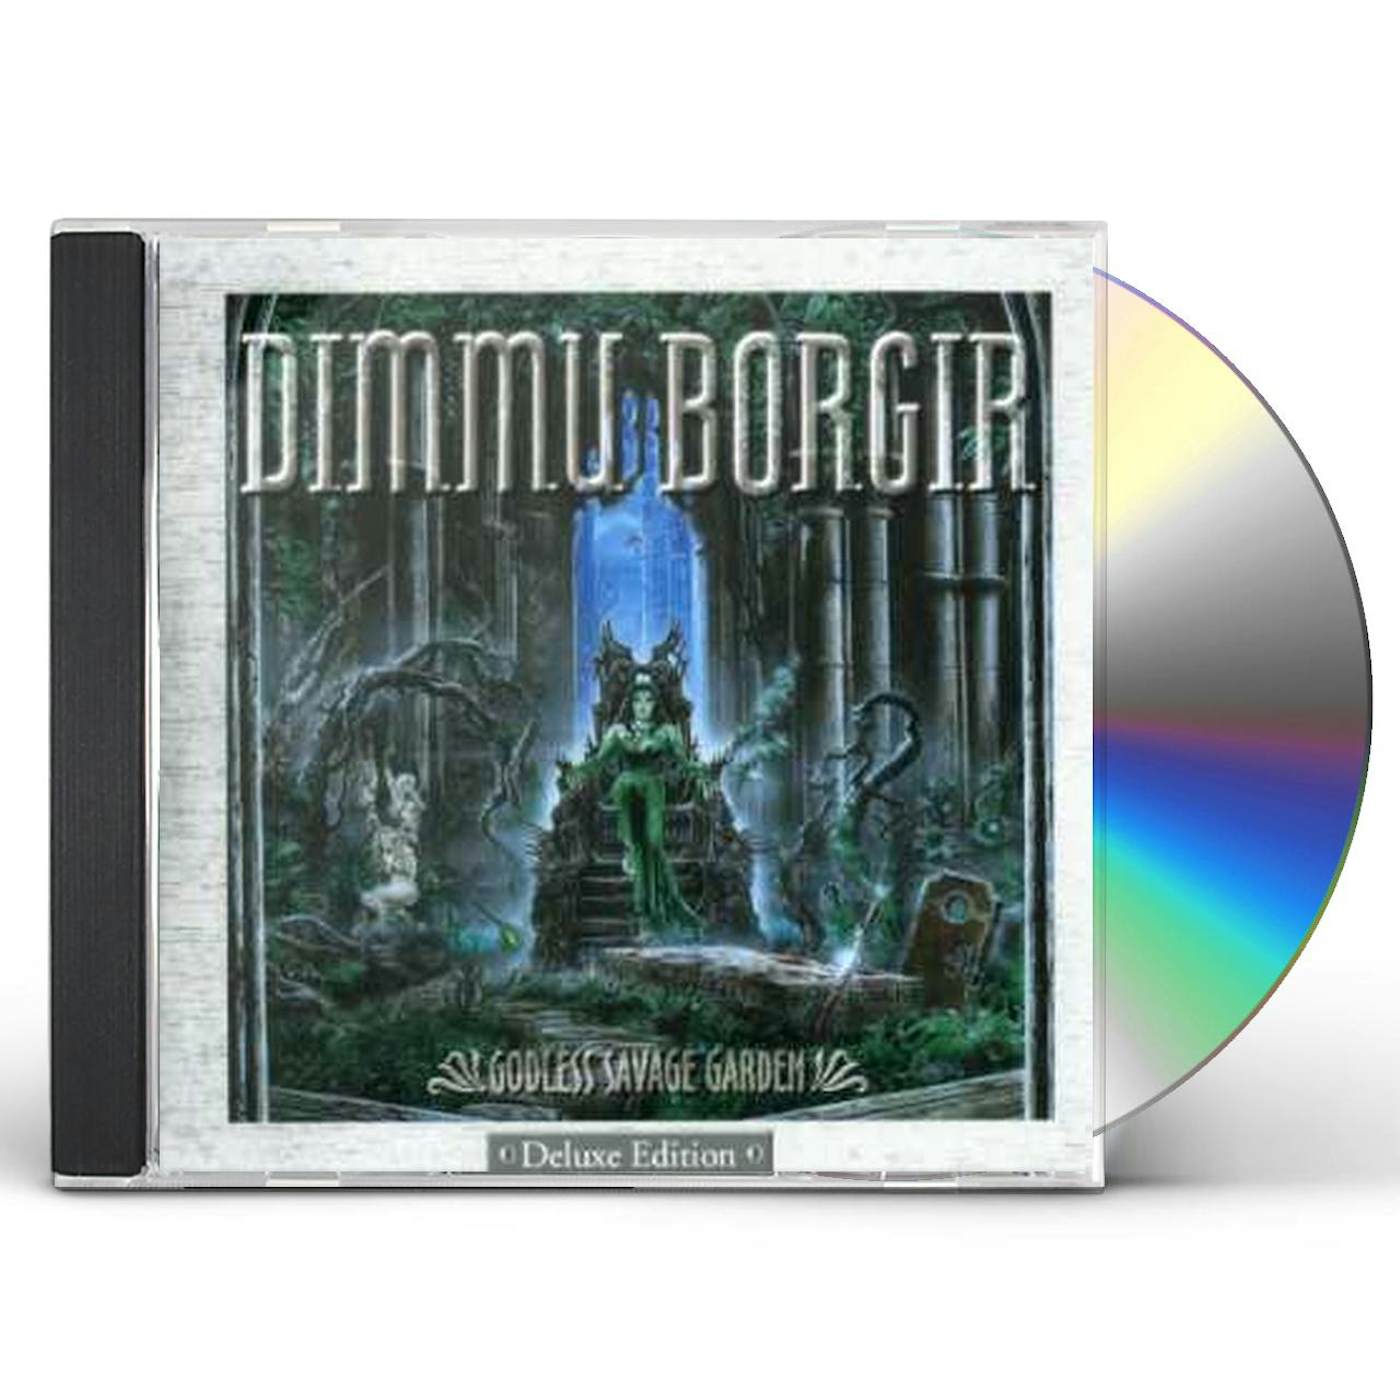 Dimmu Borgir GODLESS SAVAGE GARDEN CD